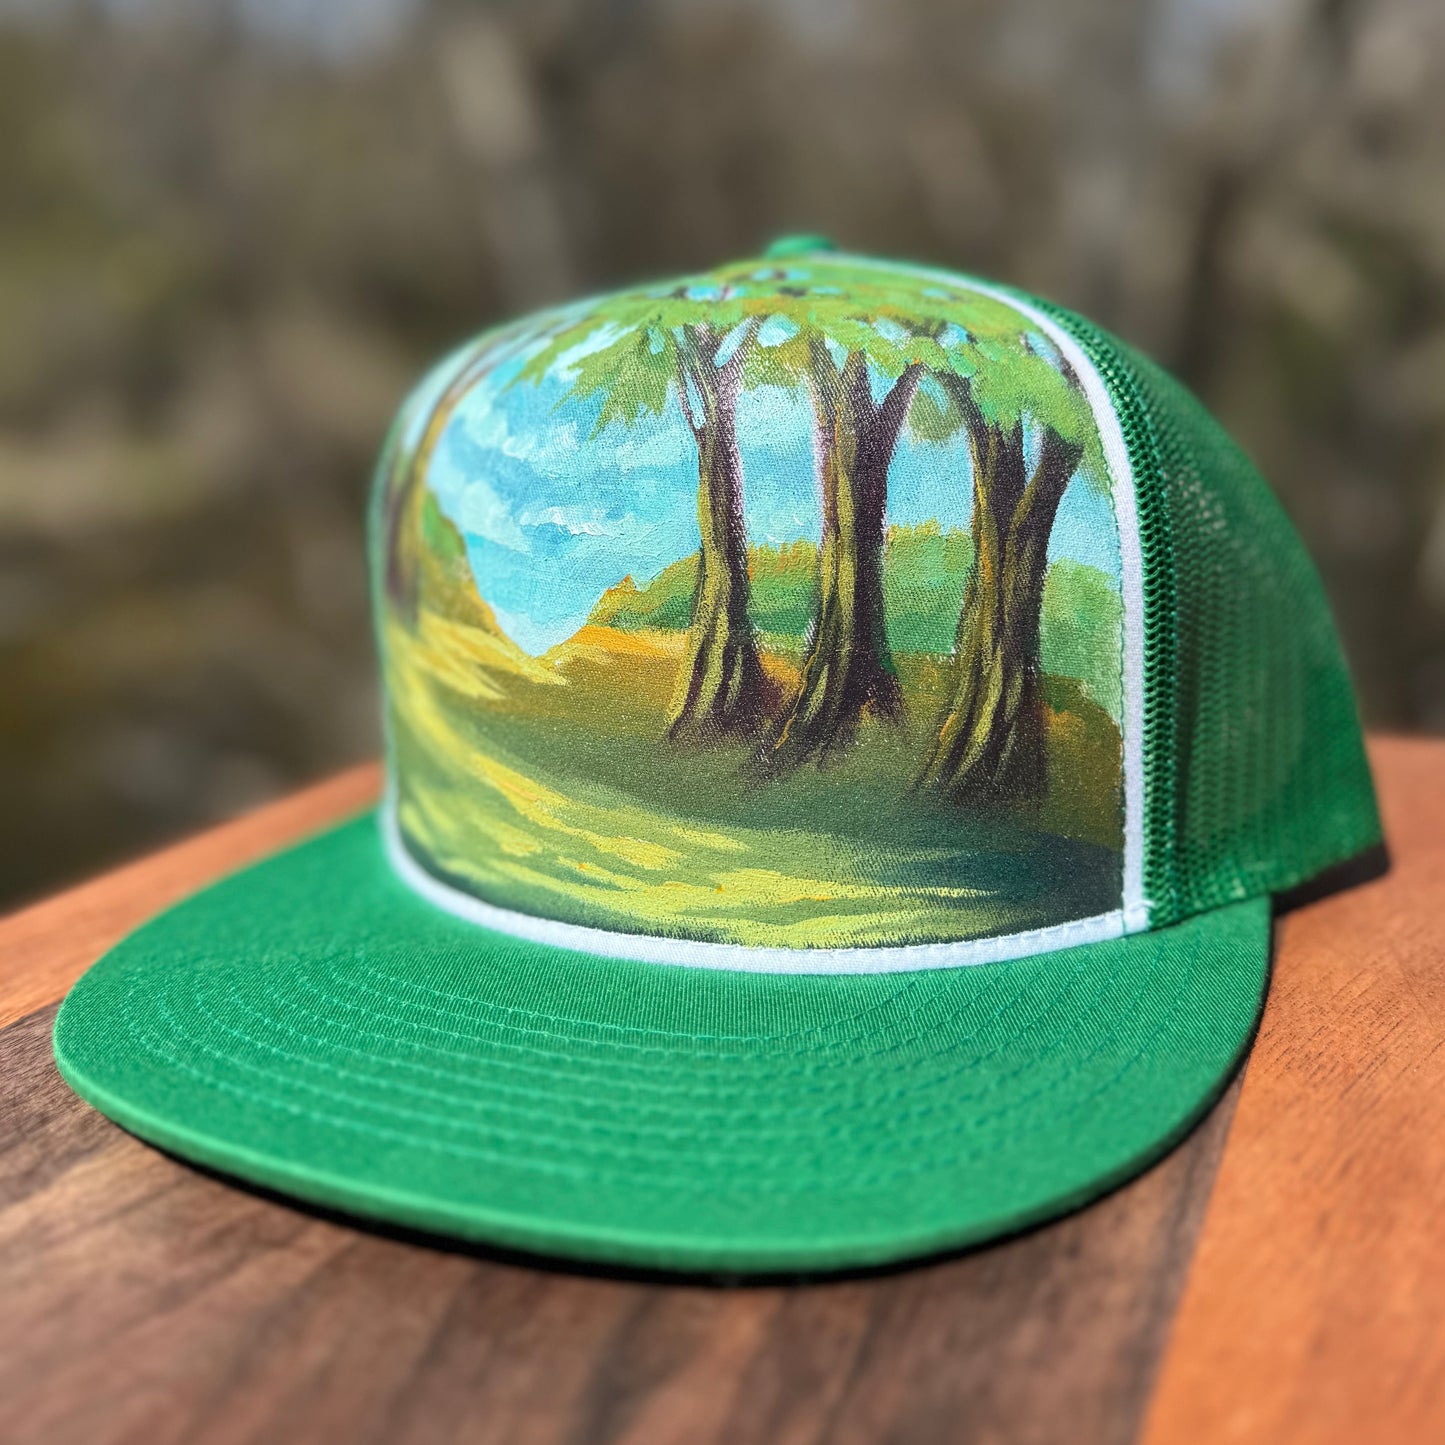 "Treelined Path" Hand Painted Hat